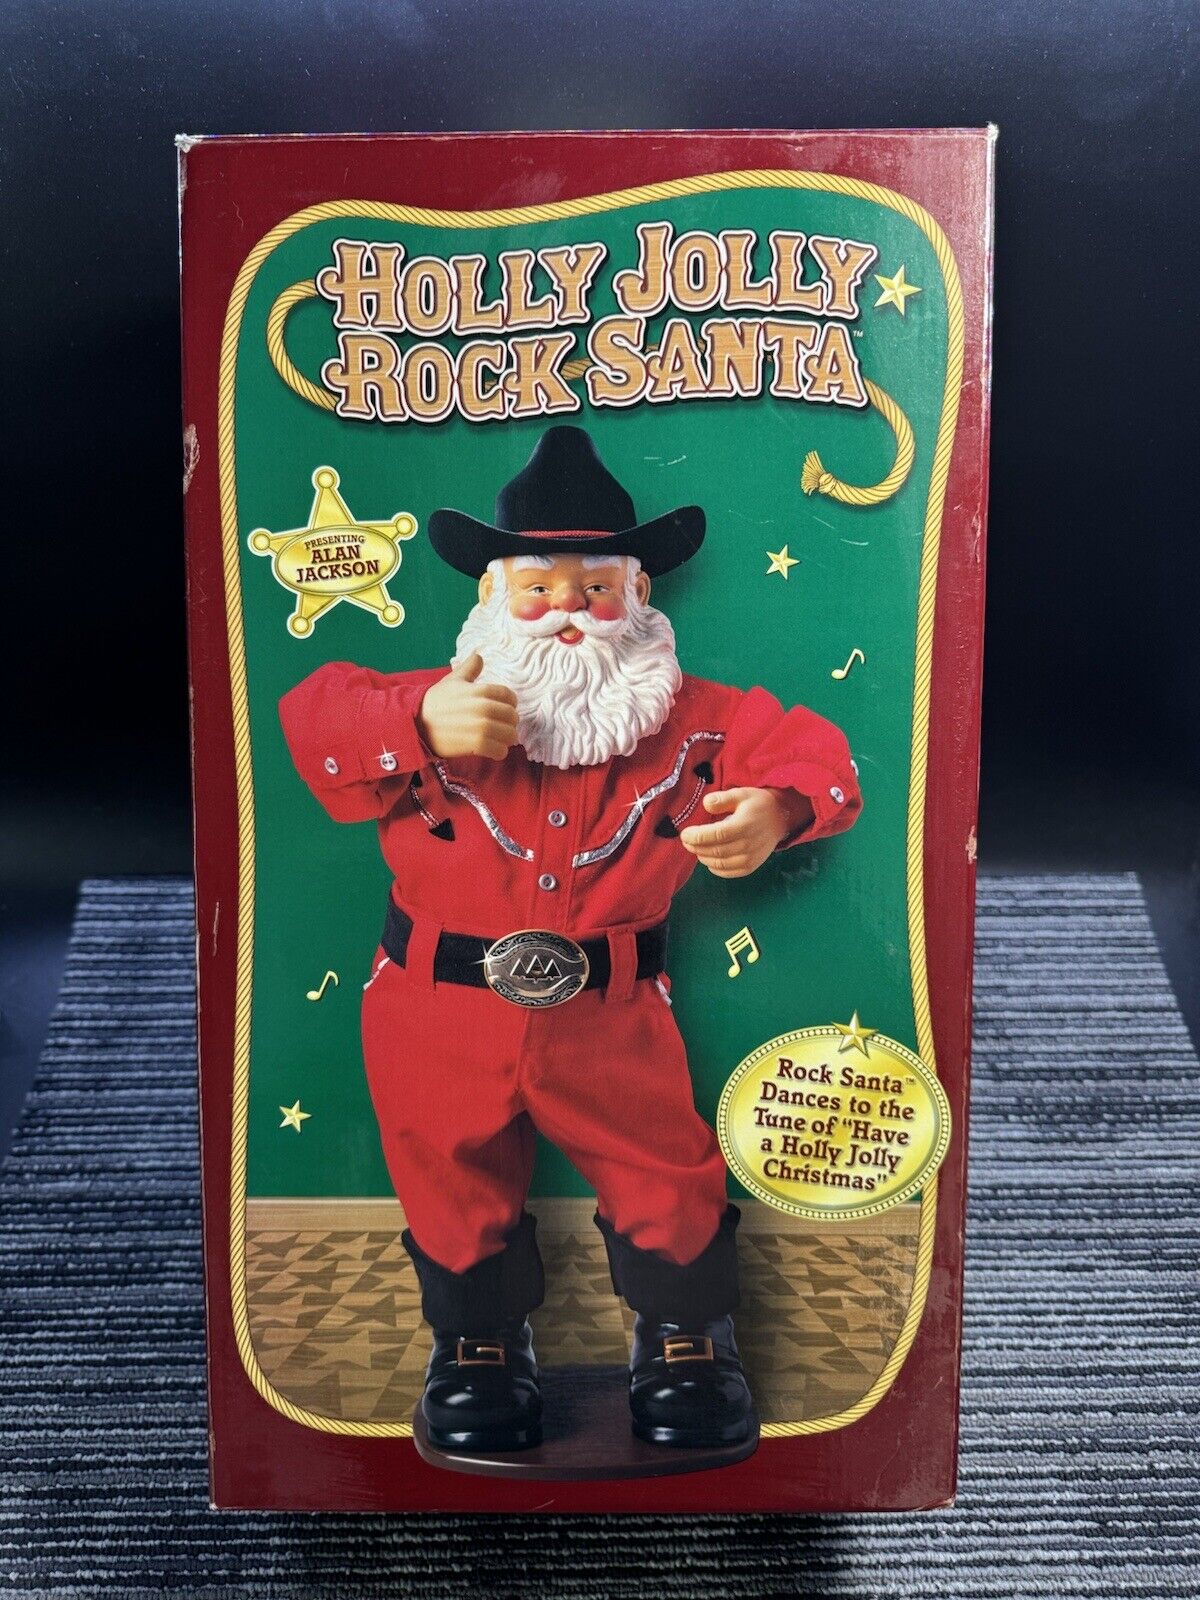 Holly Jolly Rock Santa Alan Jackson Dances Christmas Vintage 1999 /Tested